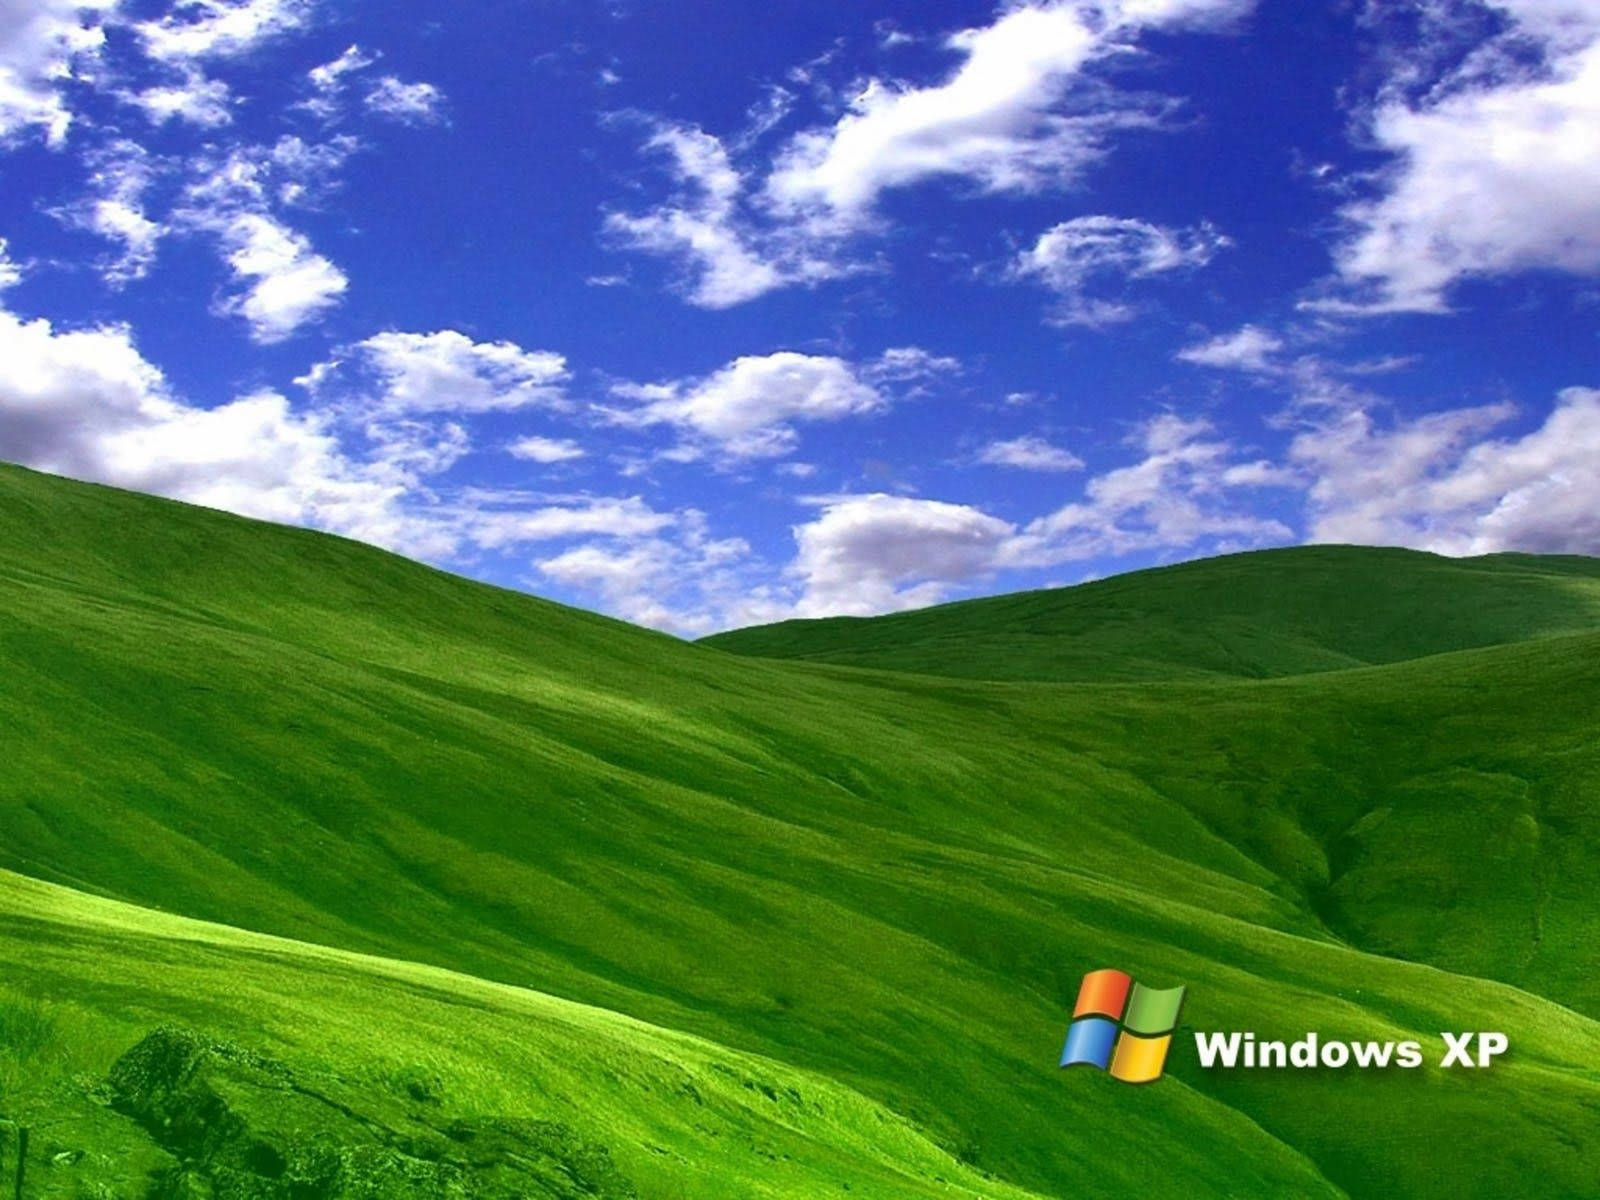 Windows Xp Desktop Background 11. Background Check All